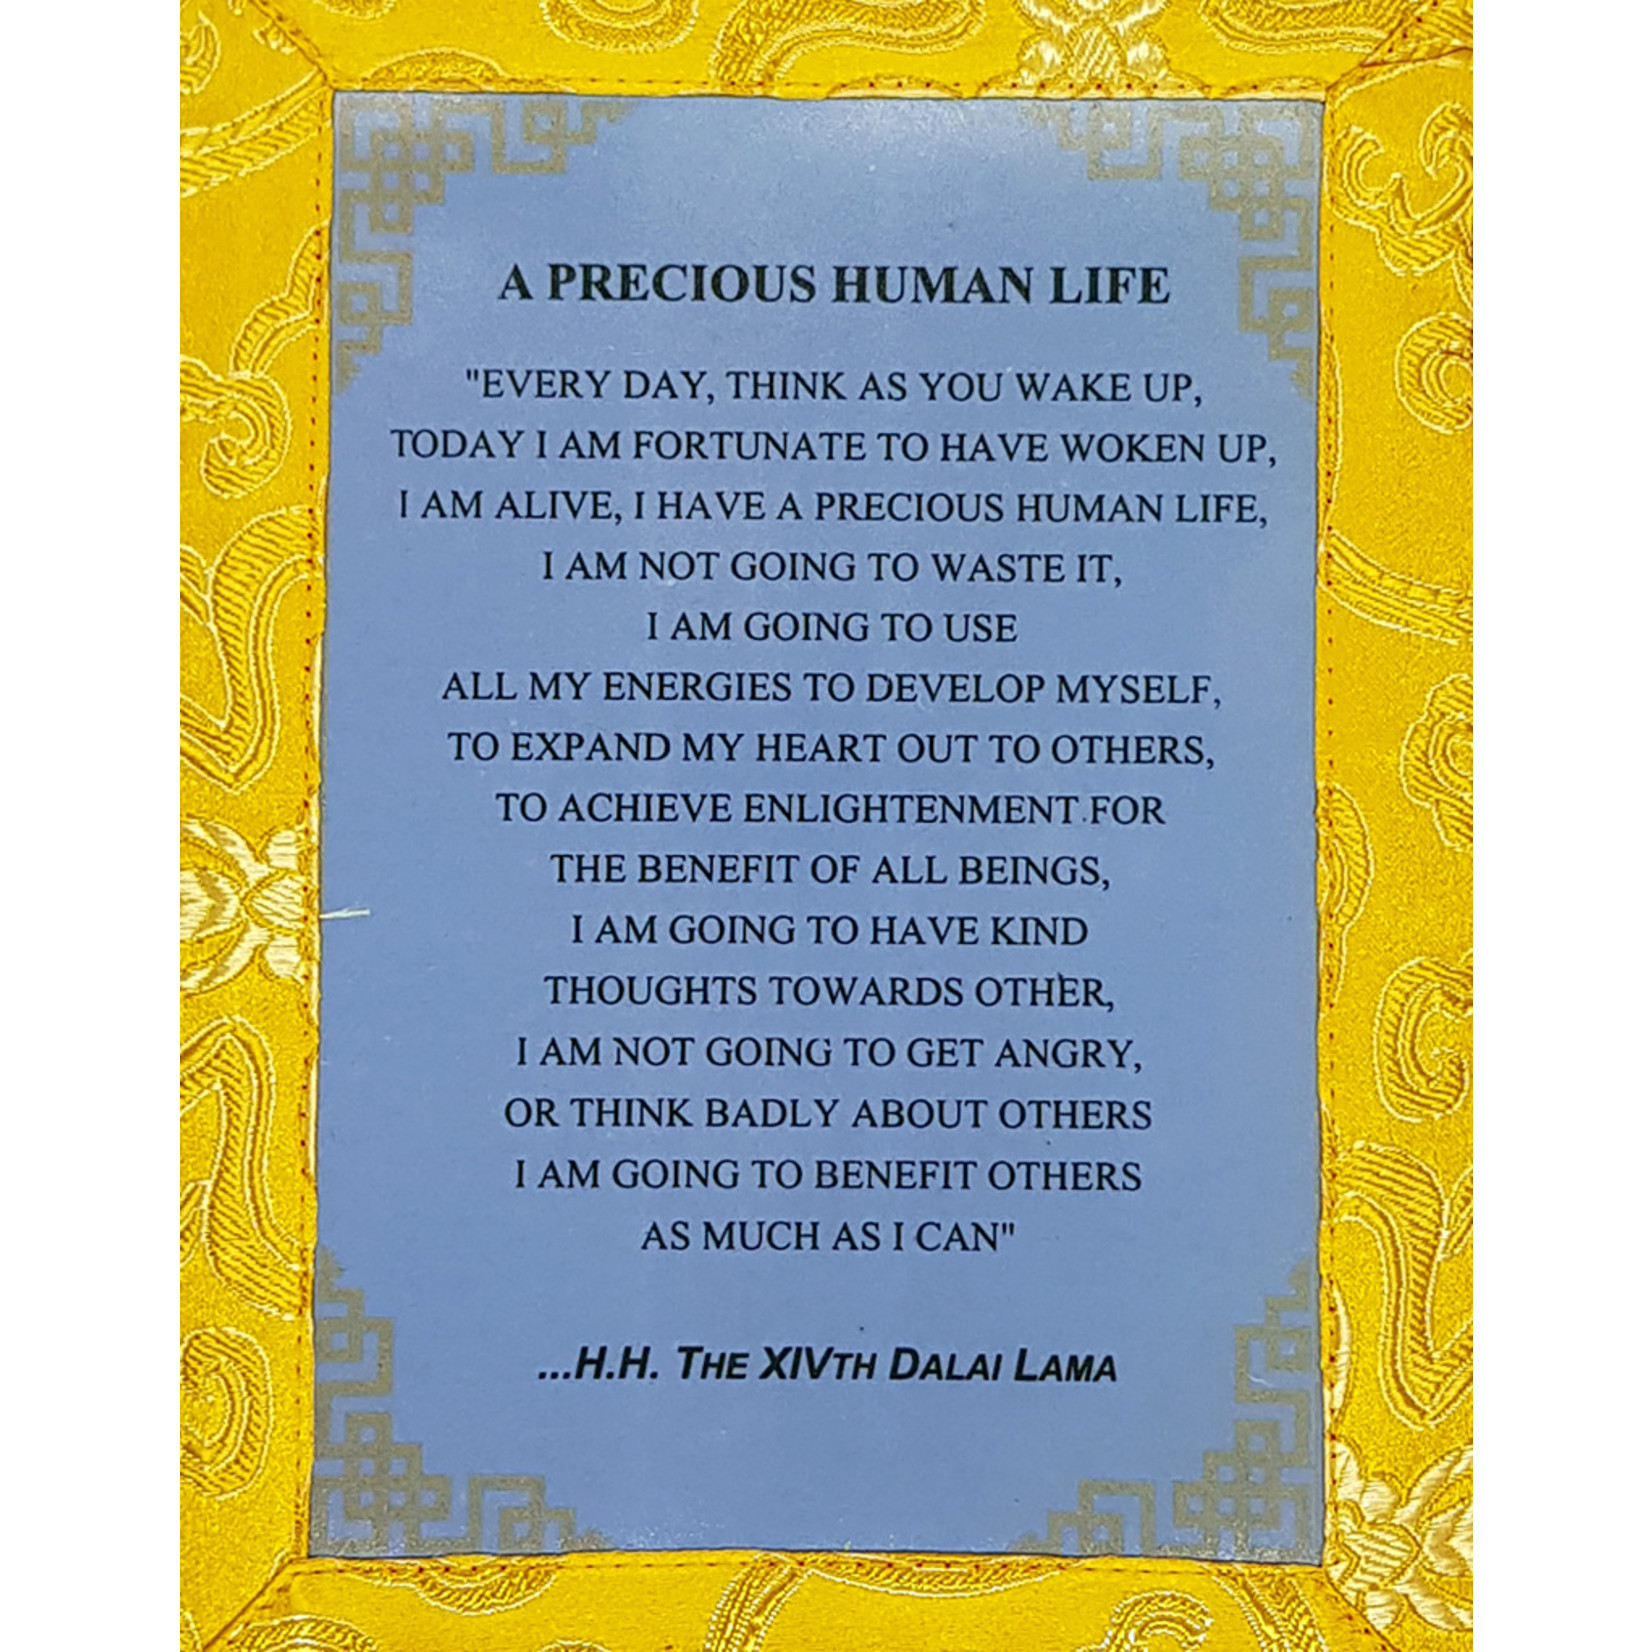 Tibetisches Thangka Dalai Lama Zitat "PRECIOUS HUMAN LIFE"